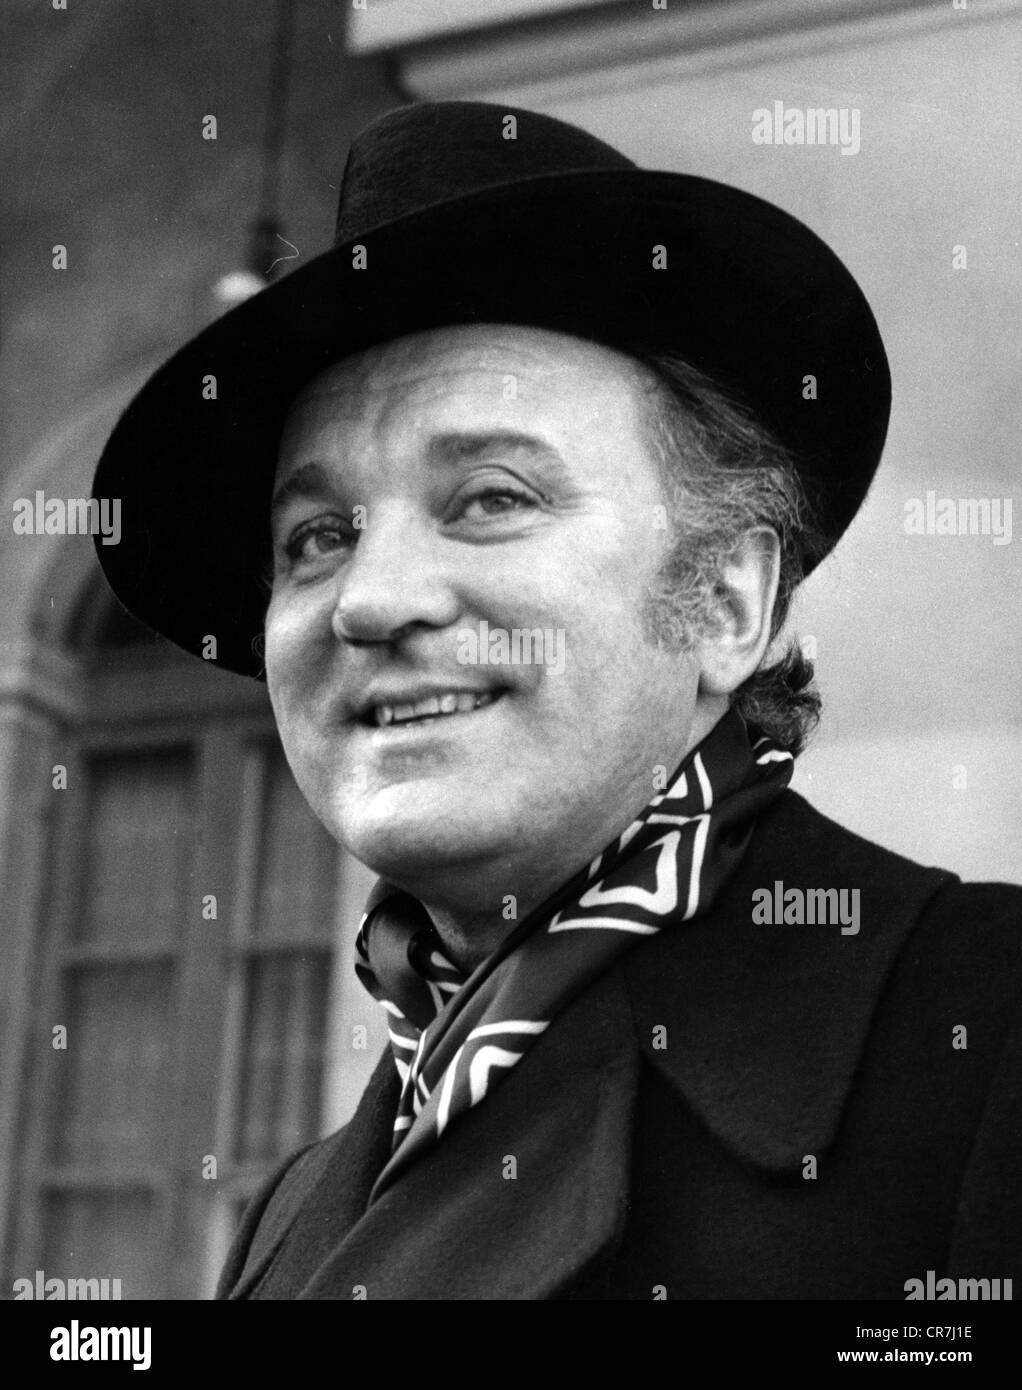 Gedda, Nicolai, * 11.7.1925, Swedish musician (singer, tenor), portrait, circa 1970s, Stock Photo